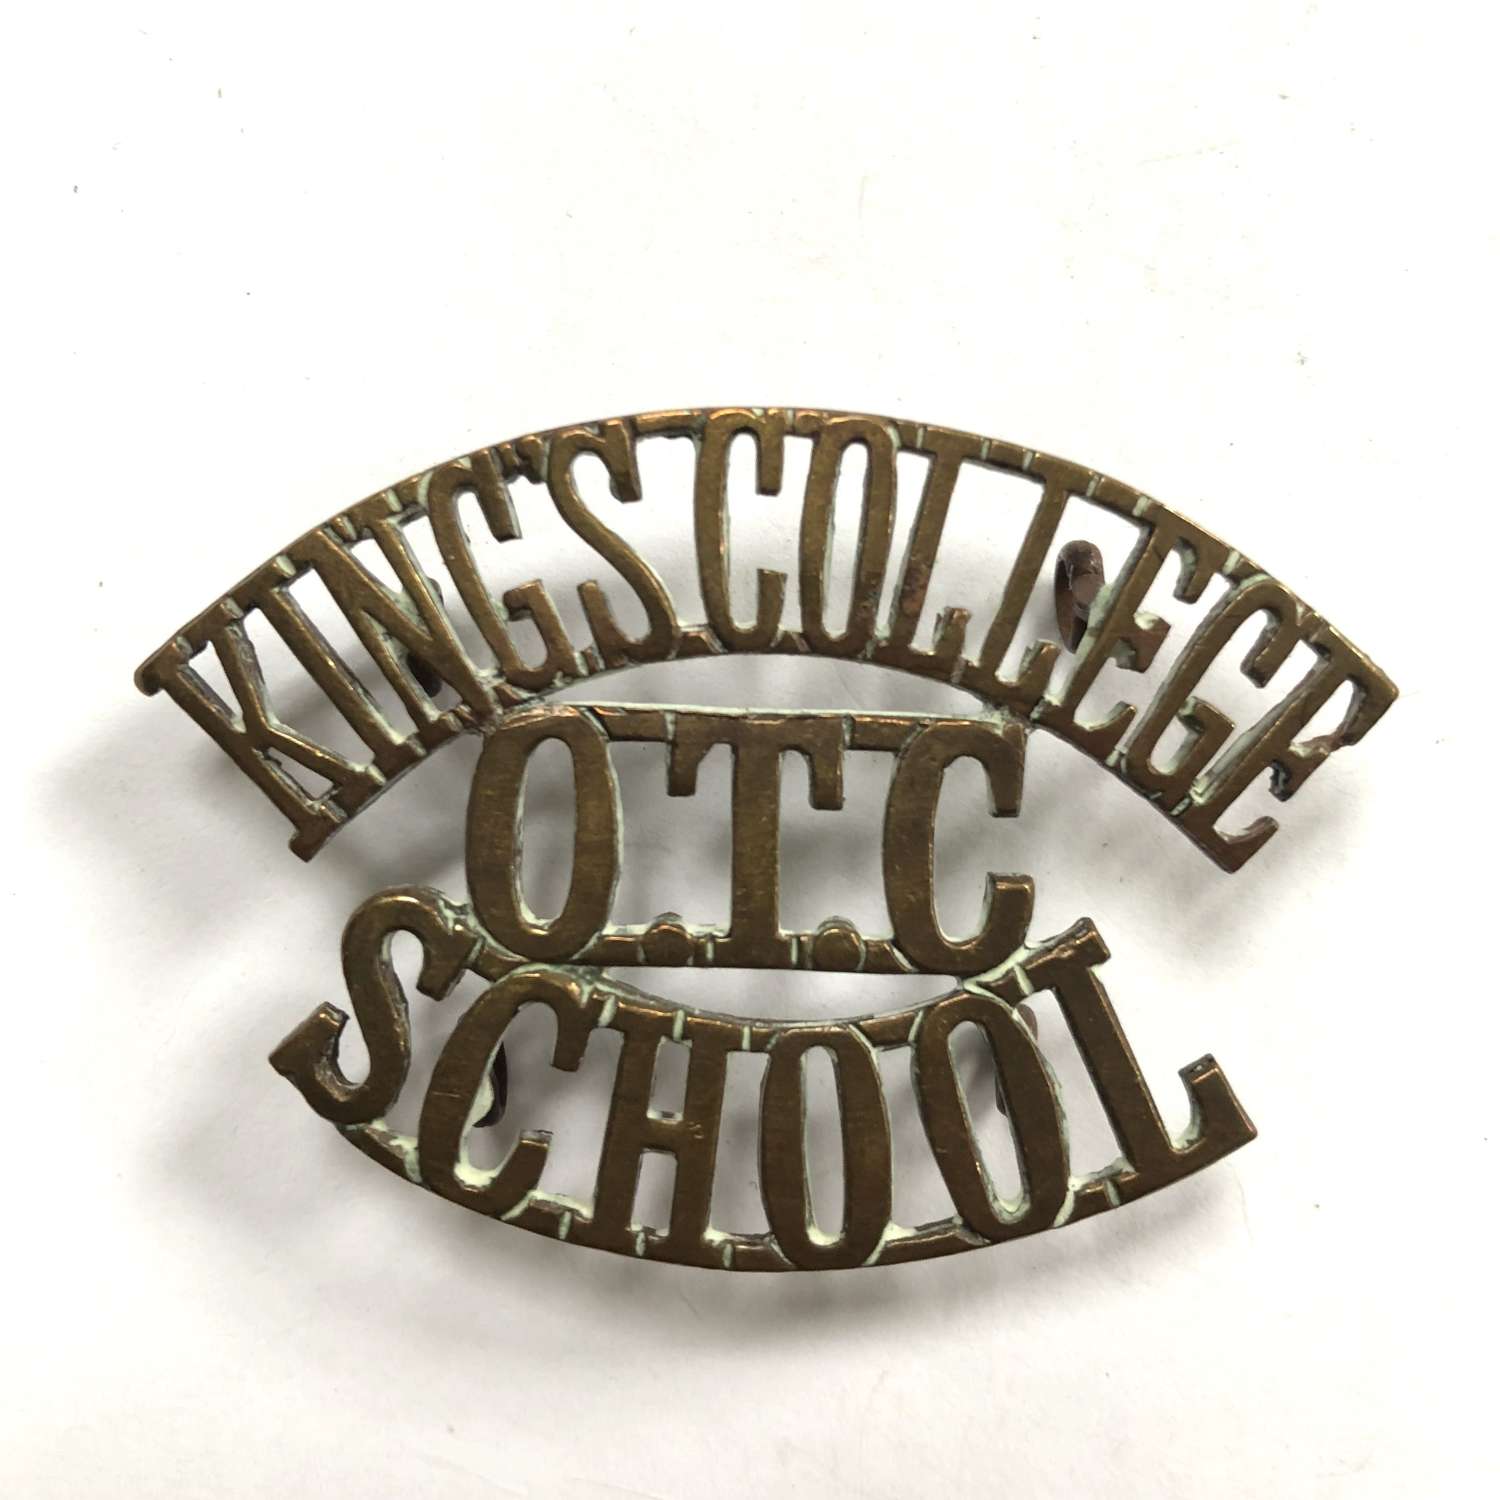 KING'S COLLEGE / OTC / SCHOOL Wimbledon shoulder title